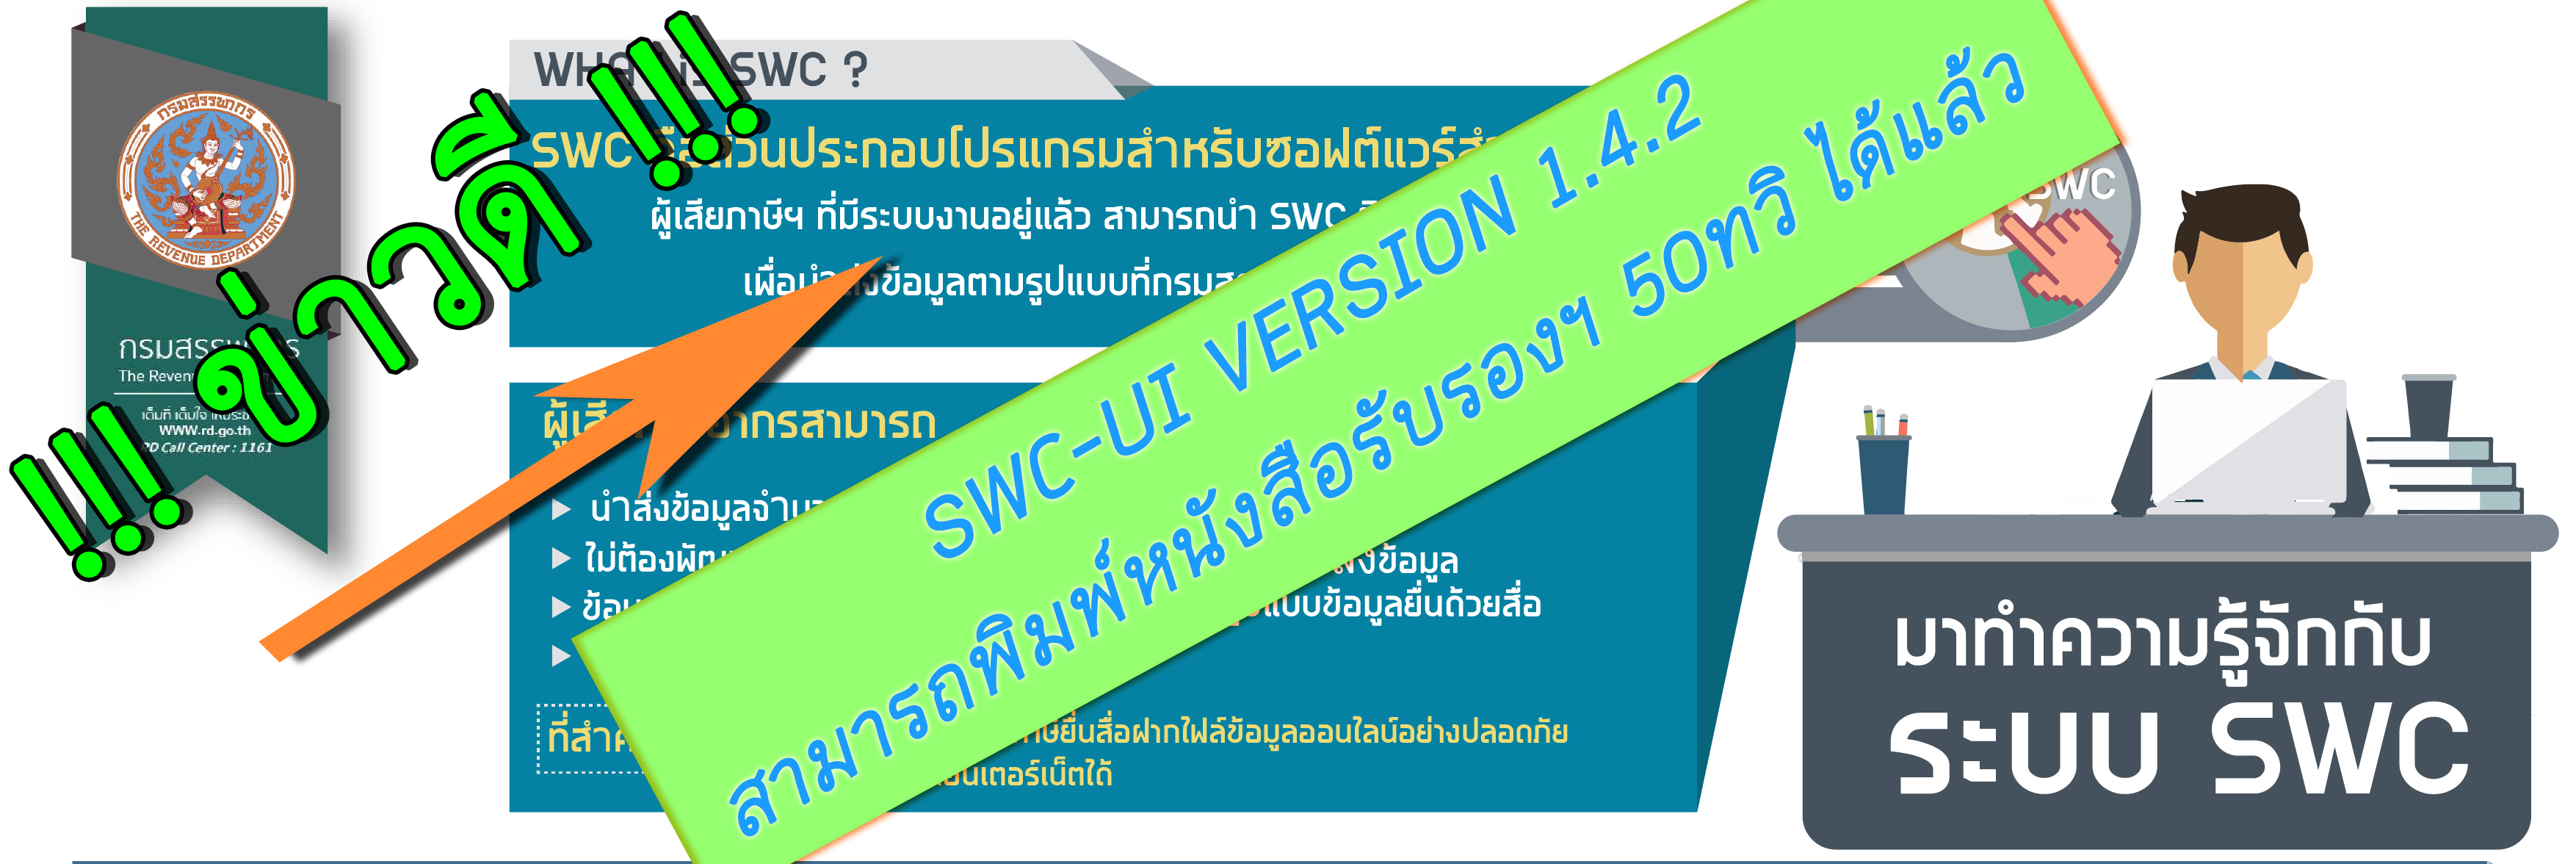 SWC UI Ver. 1.4.2 สามารถพิมพ์หนังสือรับรองฯ 50 ทวิ ได้แล้ว